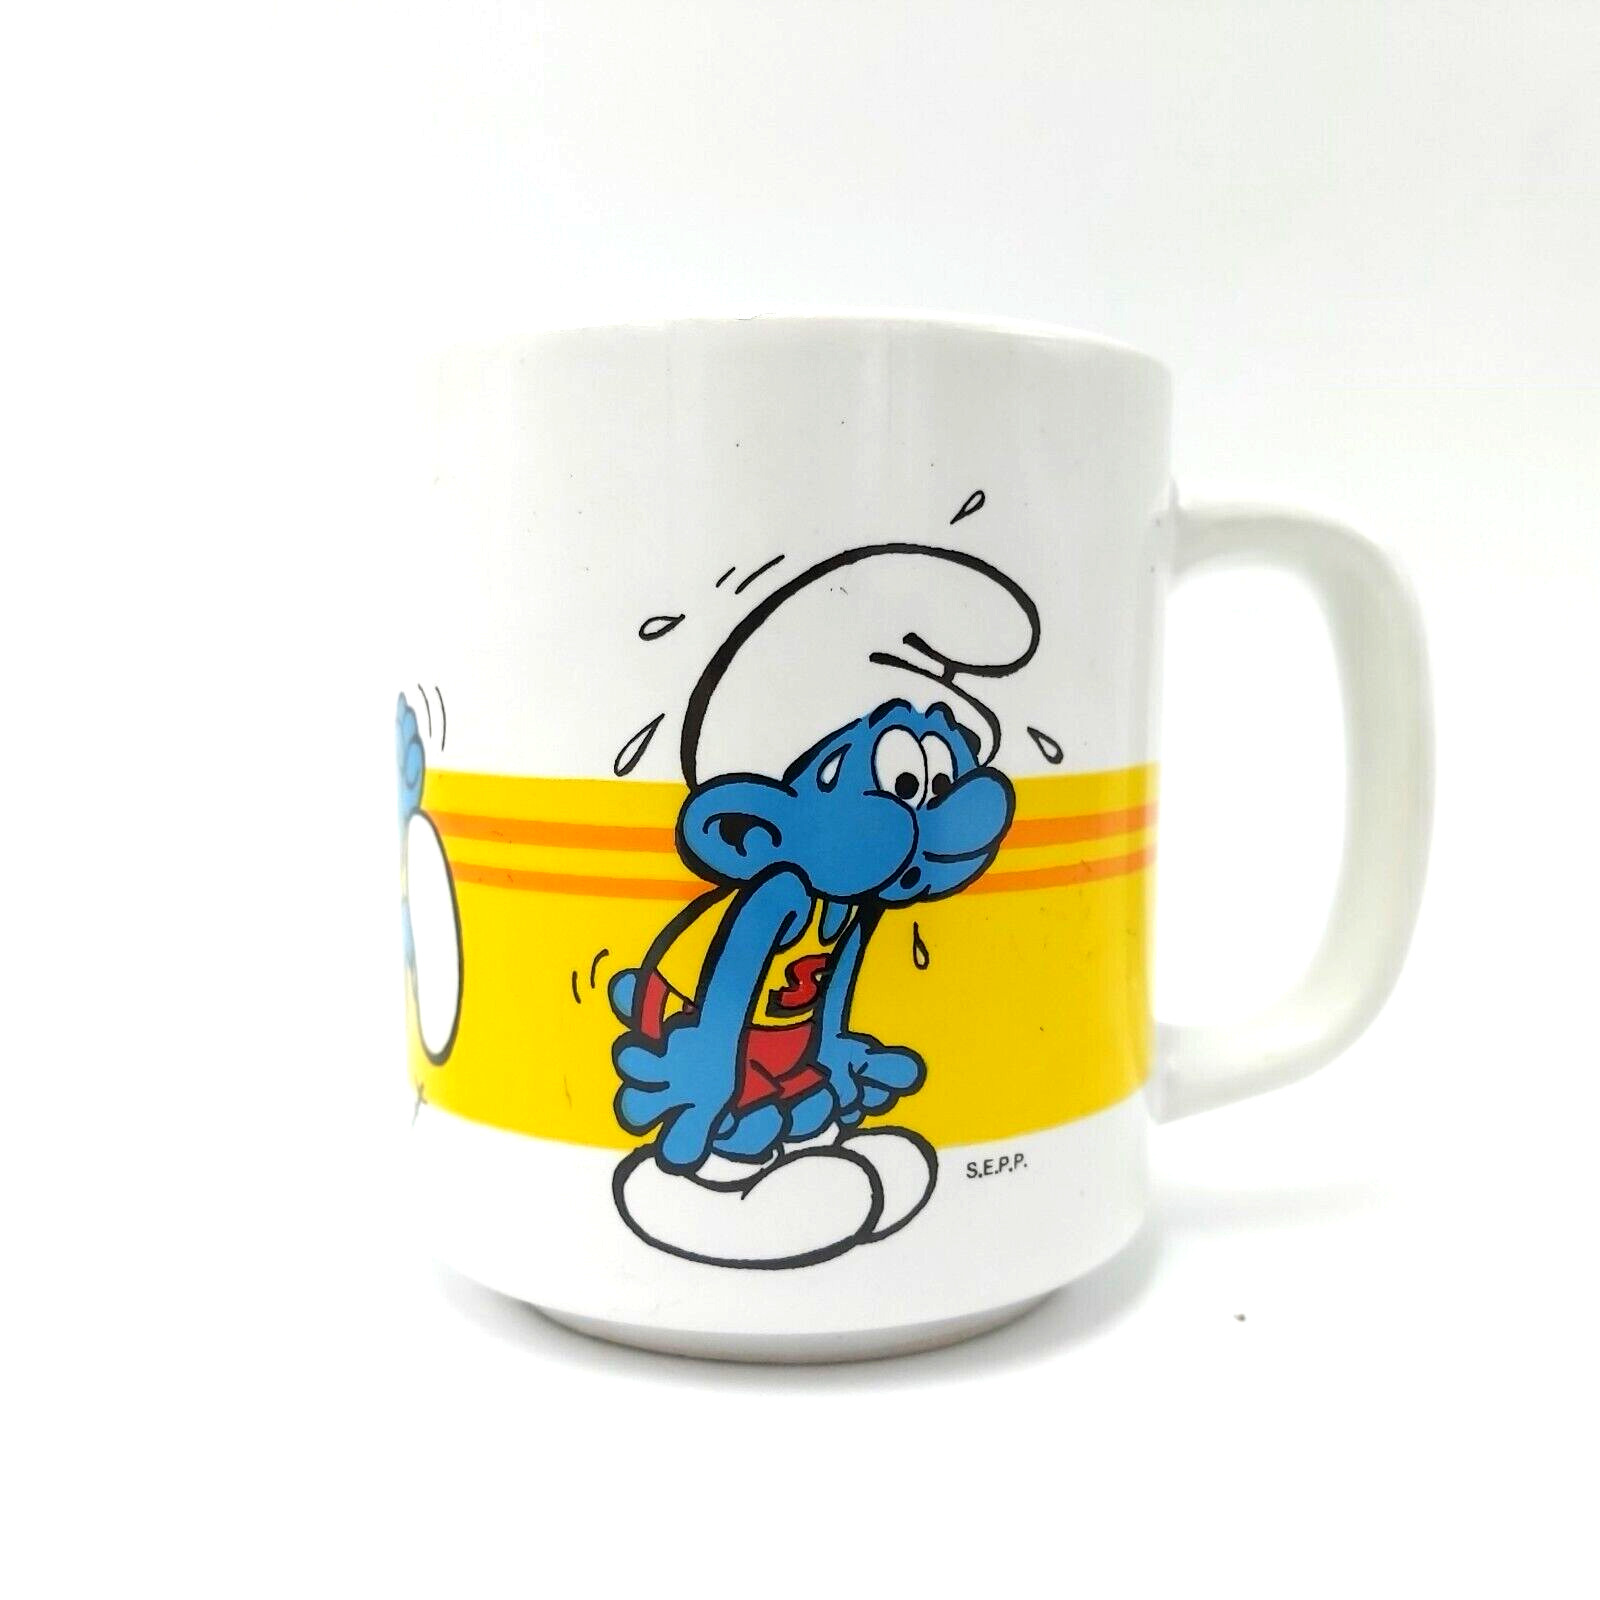 Sporty Smurf Mug-Signed by Peyo-Early 1980s-Marathon Runner-S.E.P..P